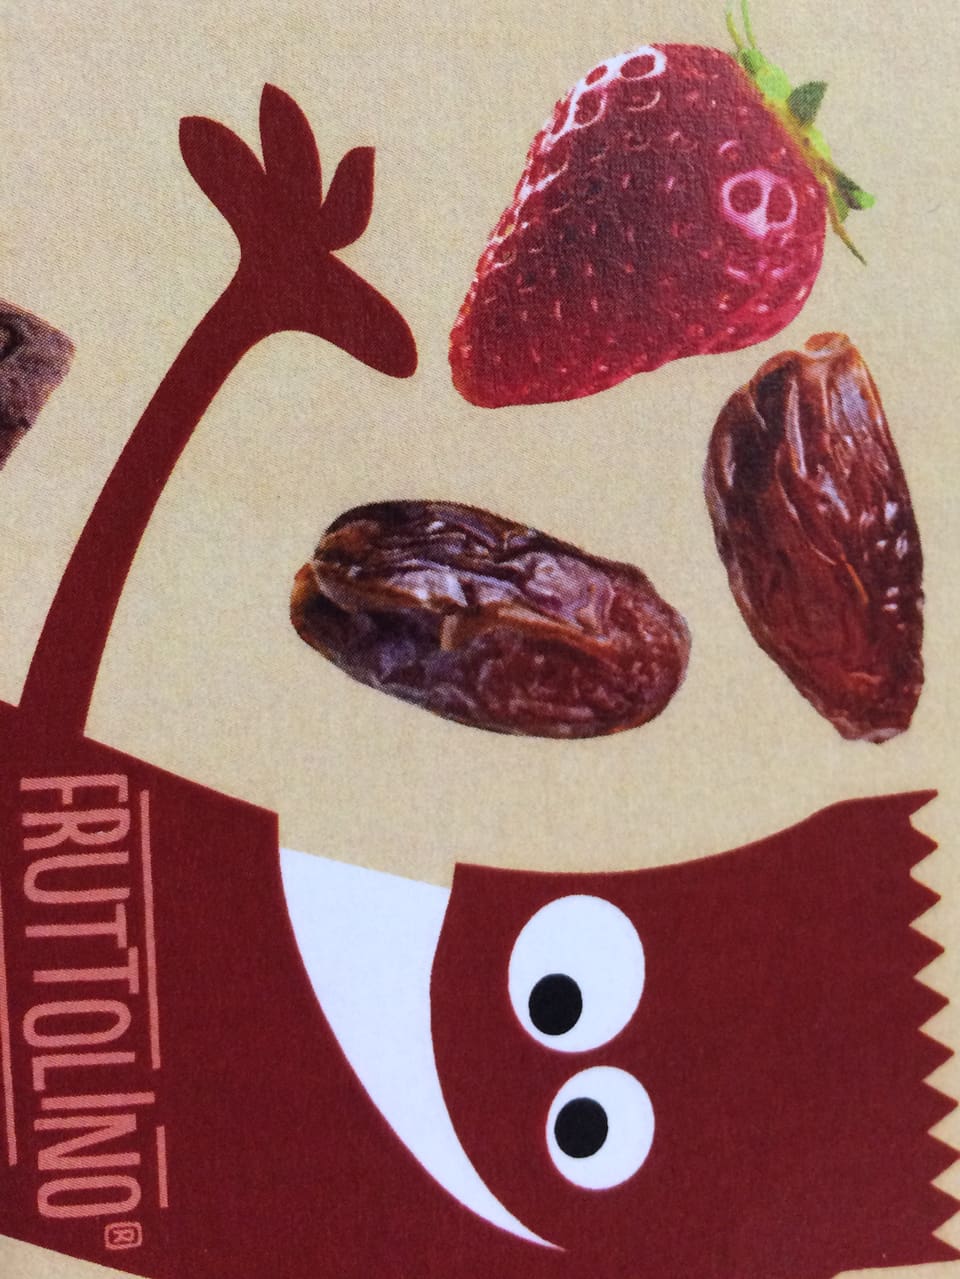 neue Verpackung: Datteln und Erdbeeren